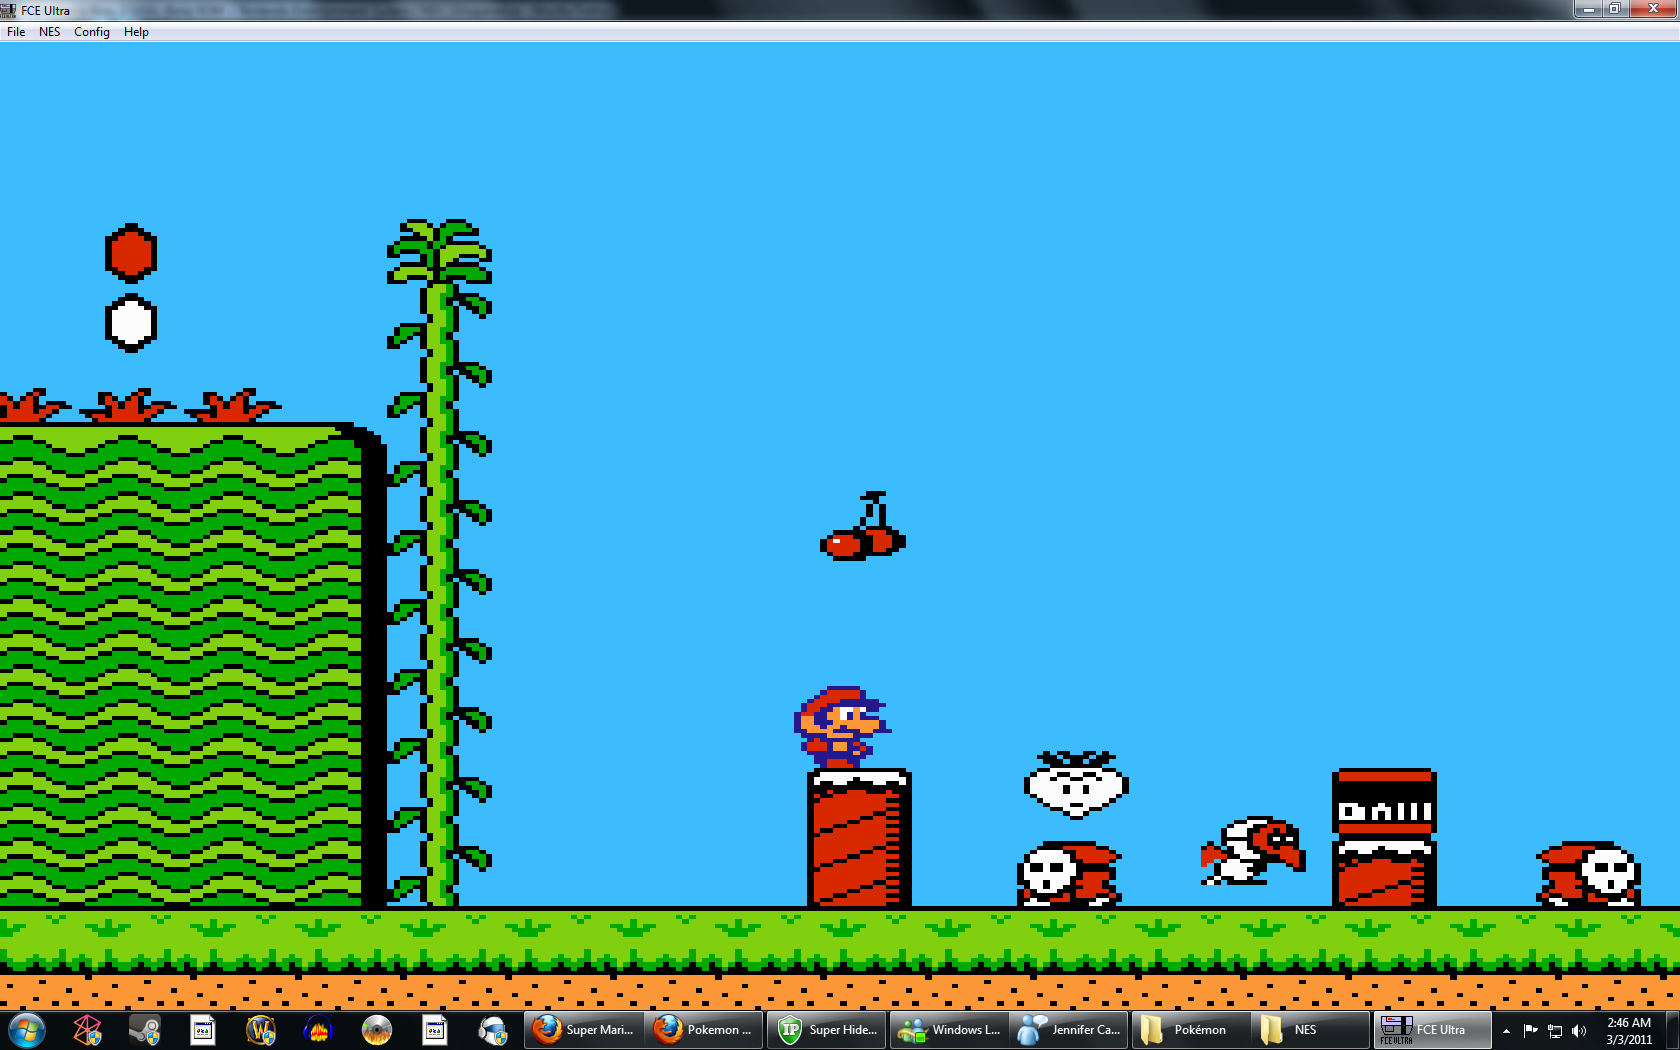 A gameplay snapshot of Super Mario Bros 2. 